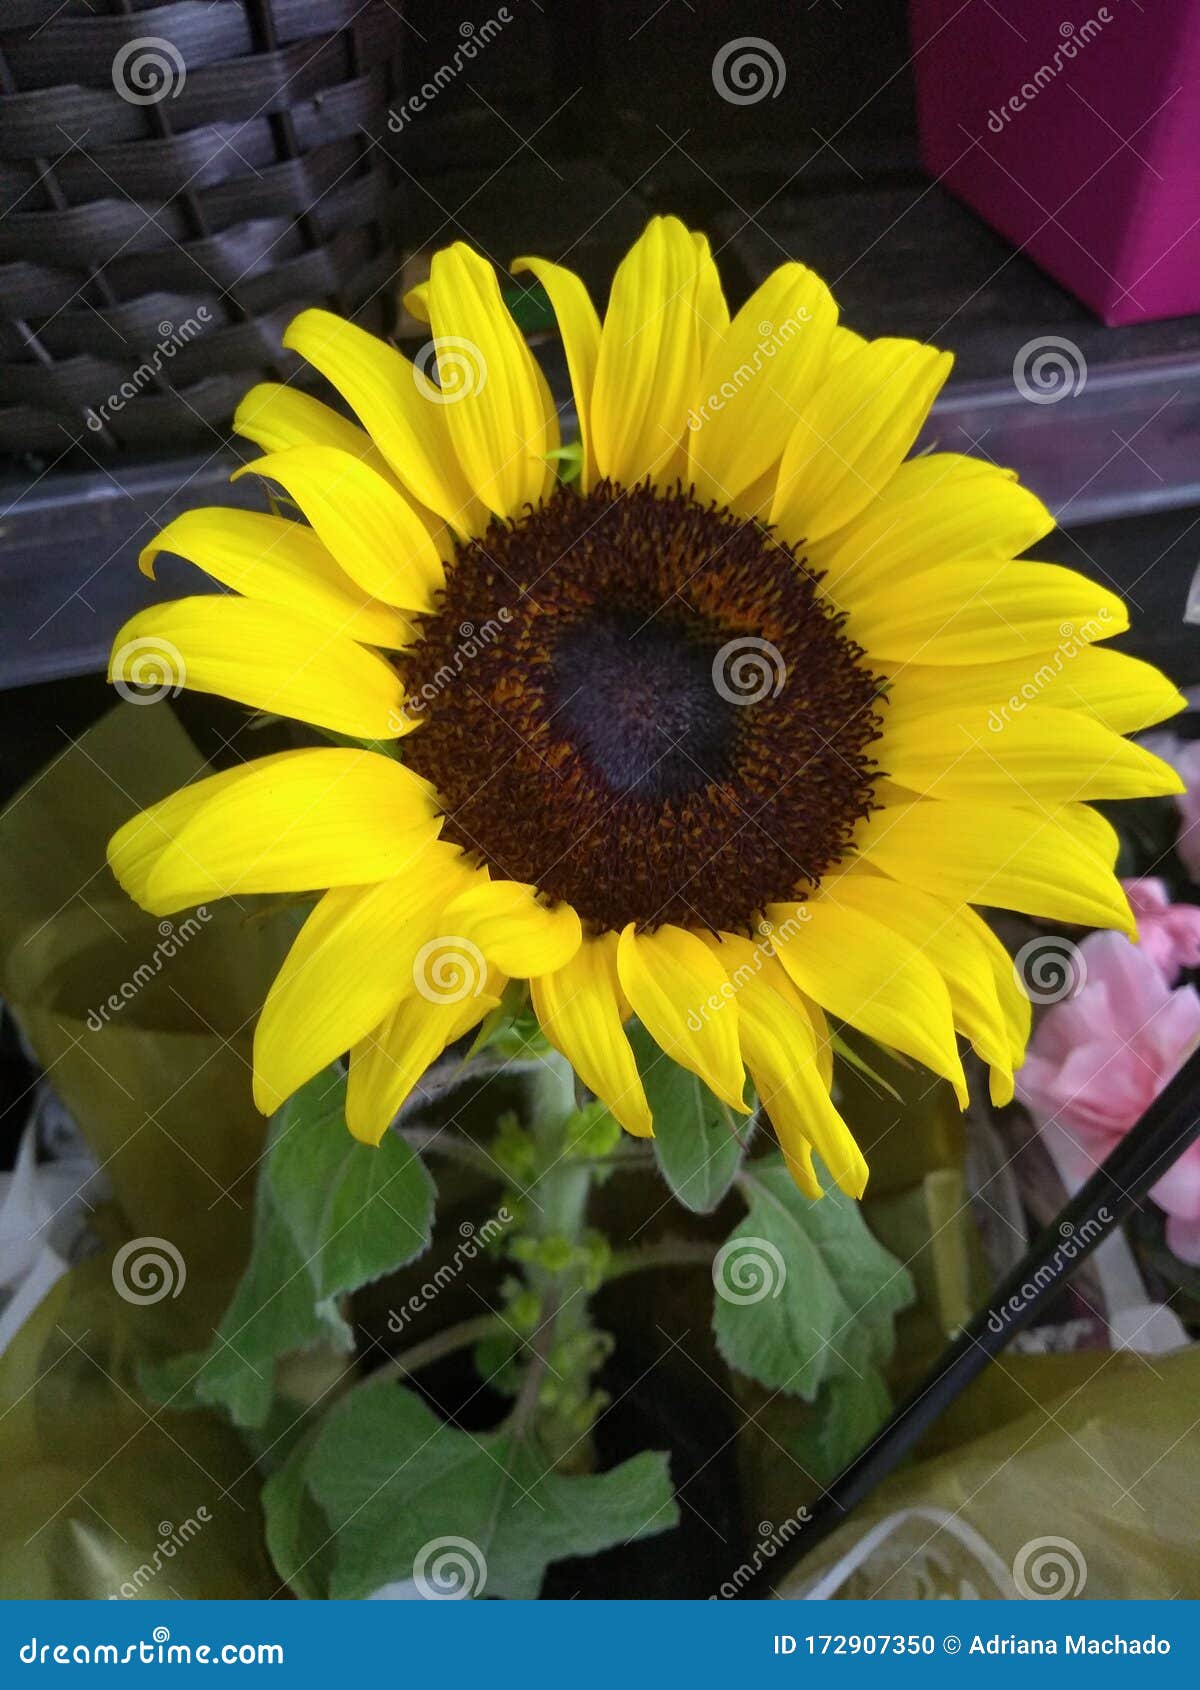 yellow flower in naturals